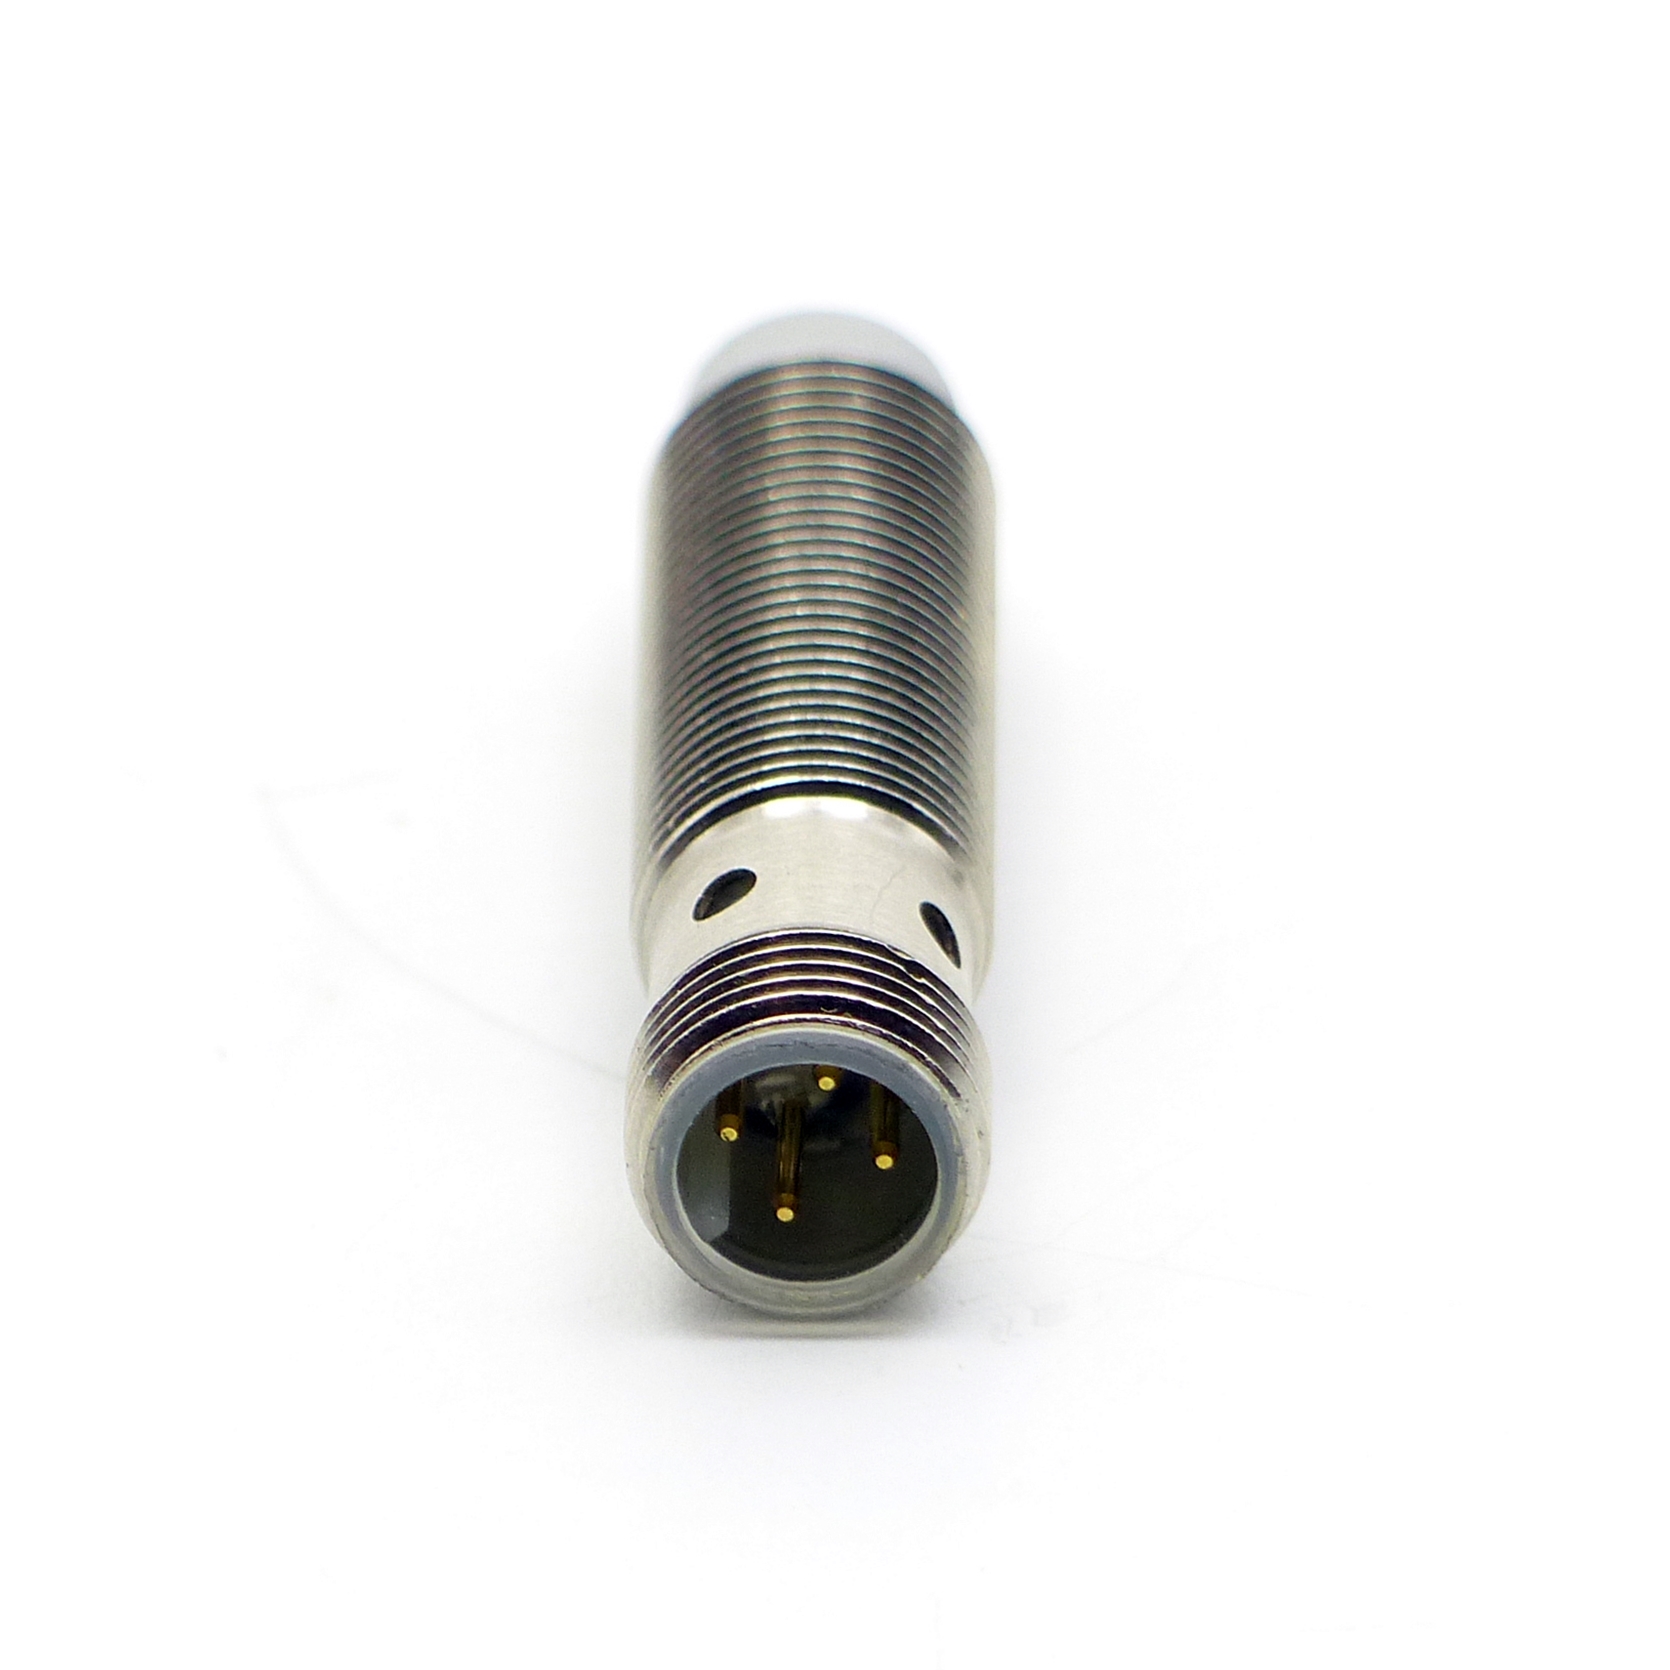 Sensor Induktiv BES 516-356-E5-C-S4 